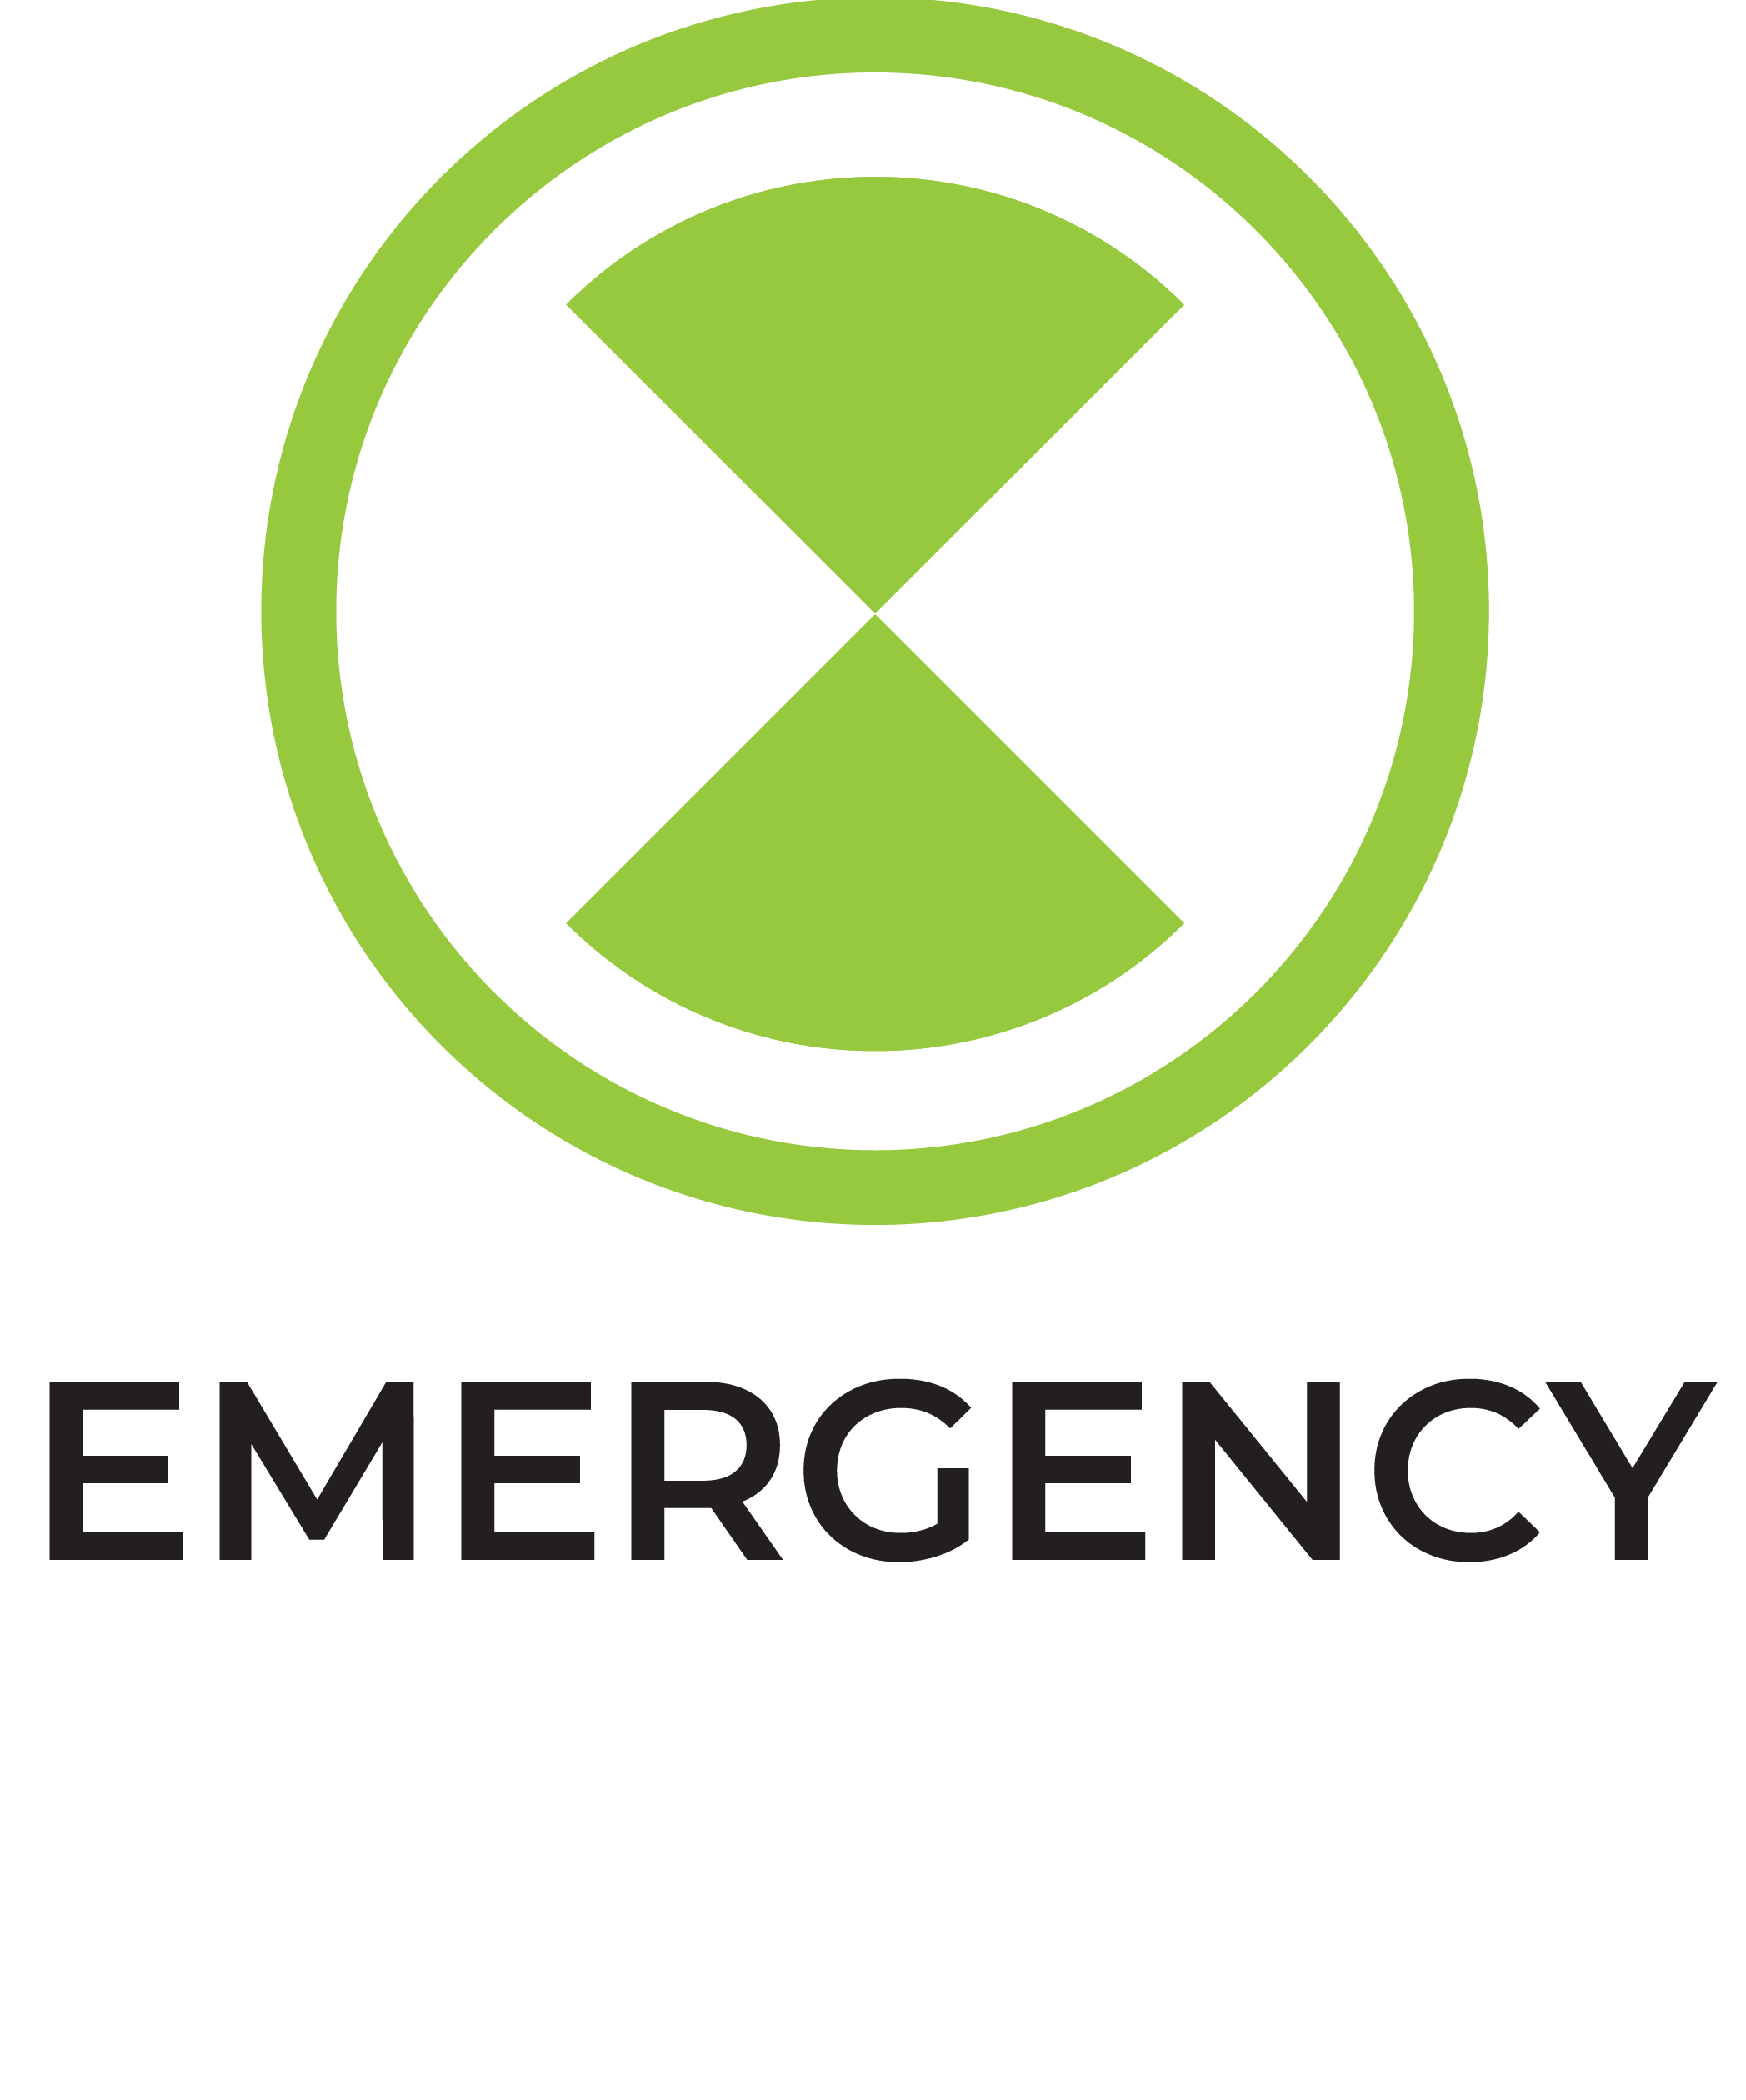 Emergency (1)